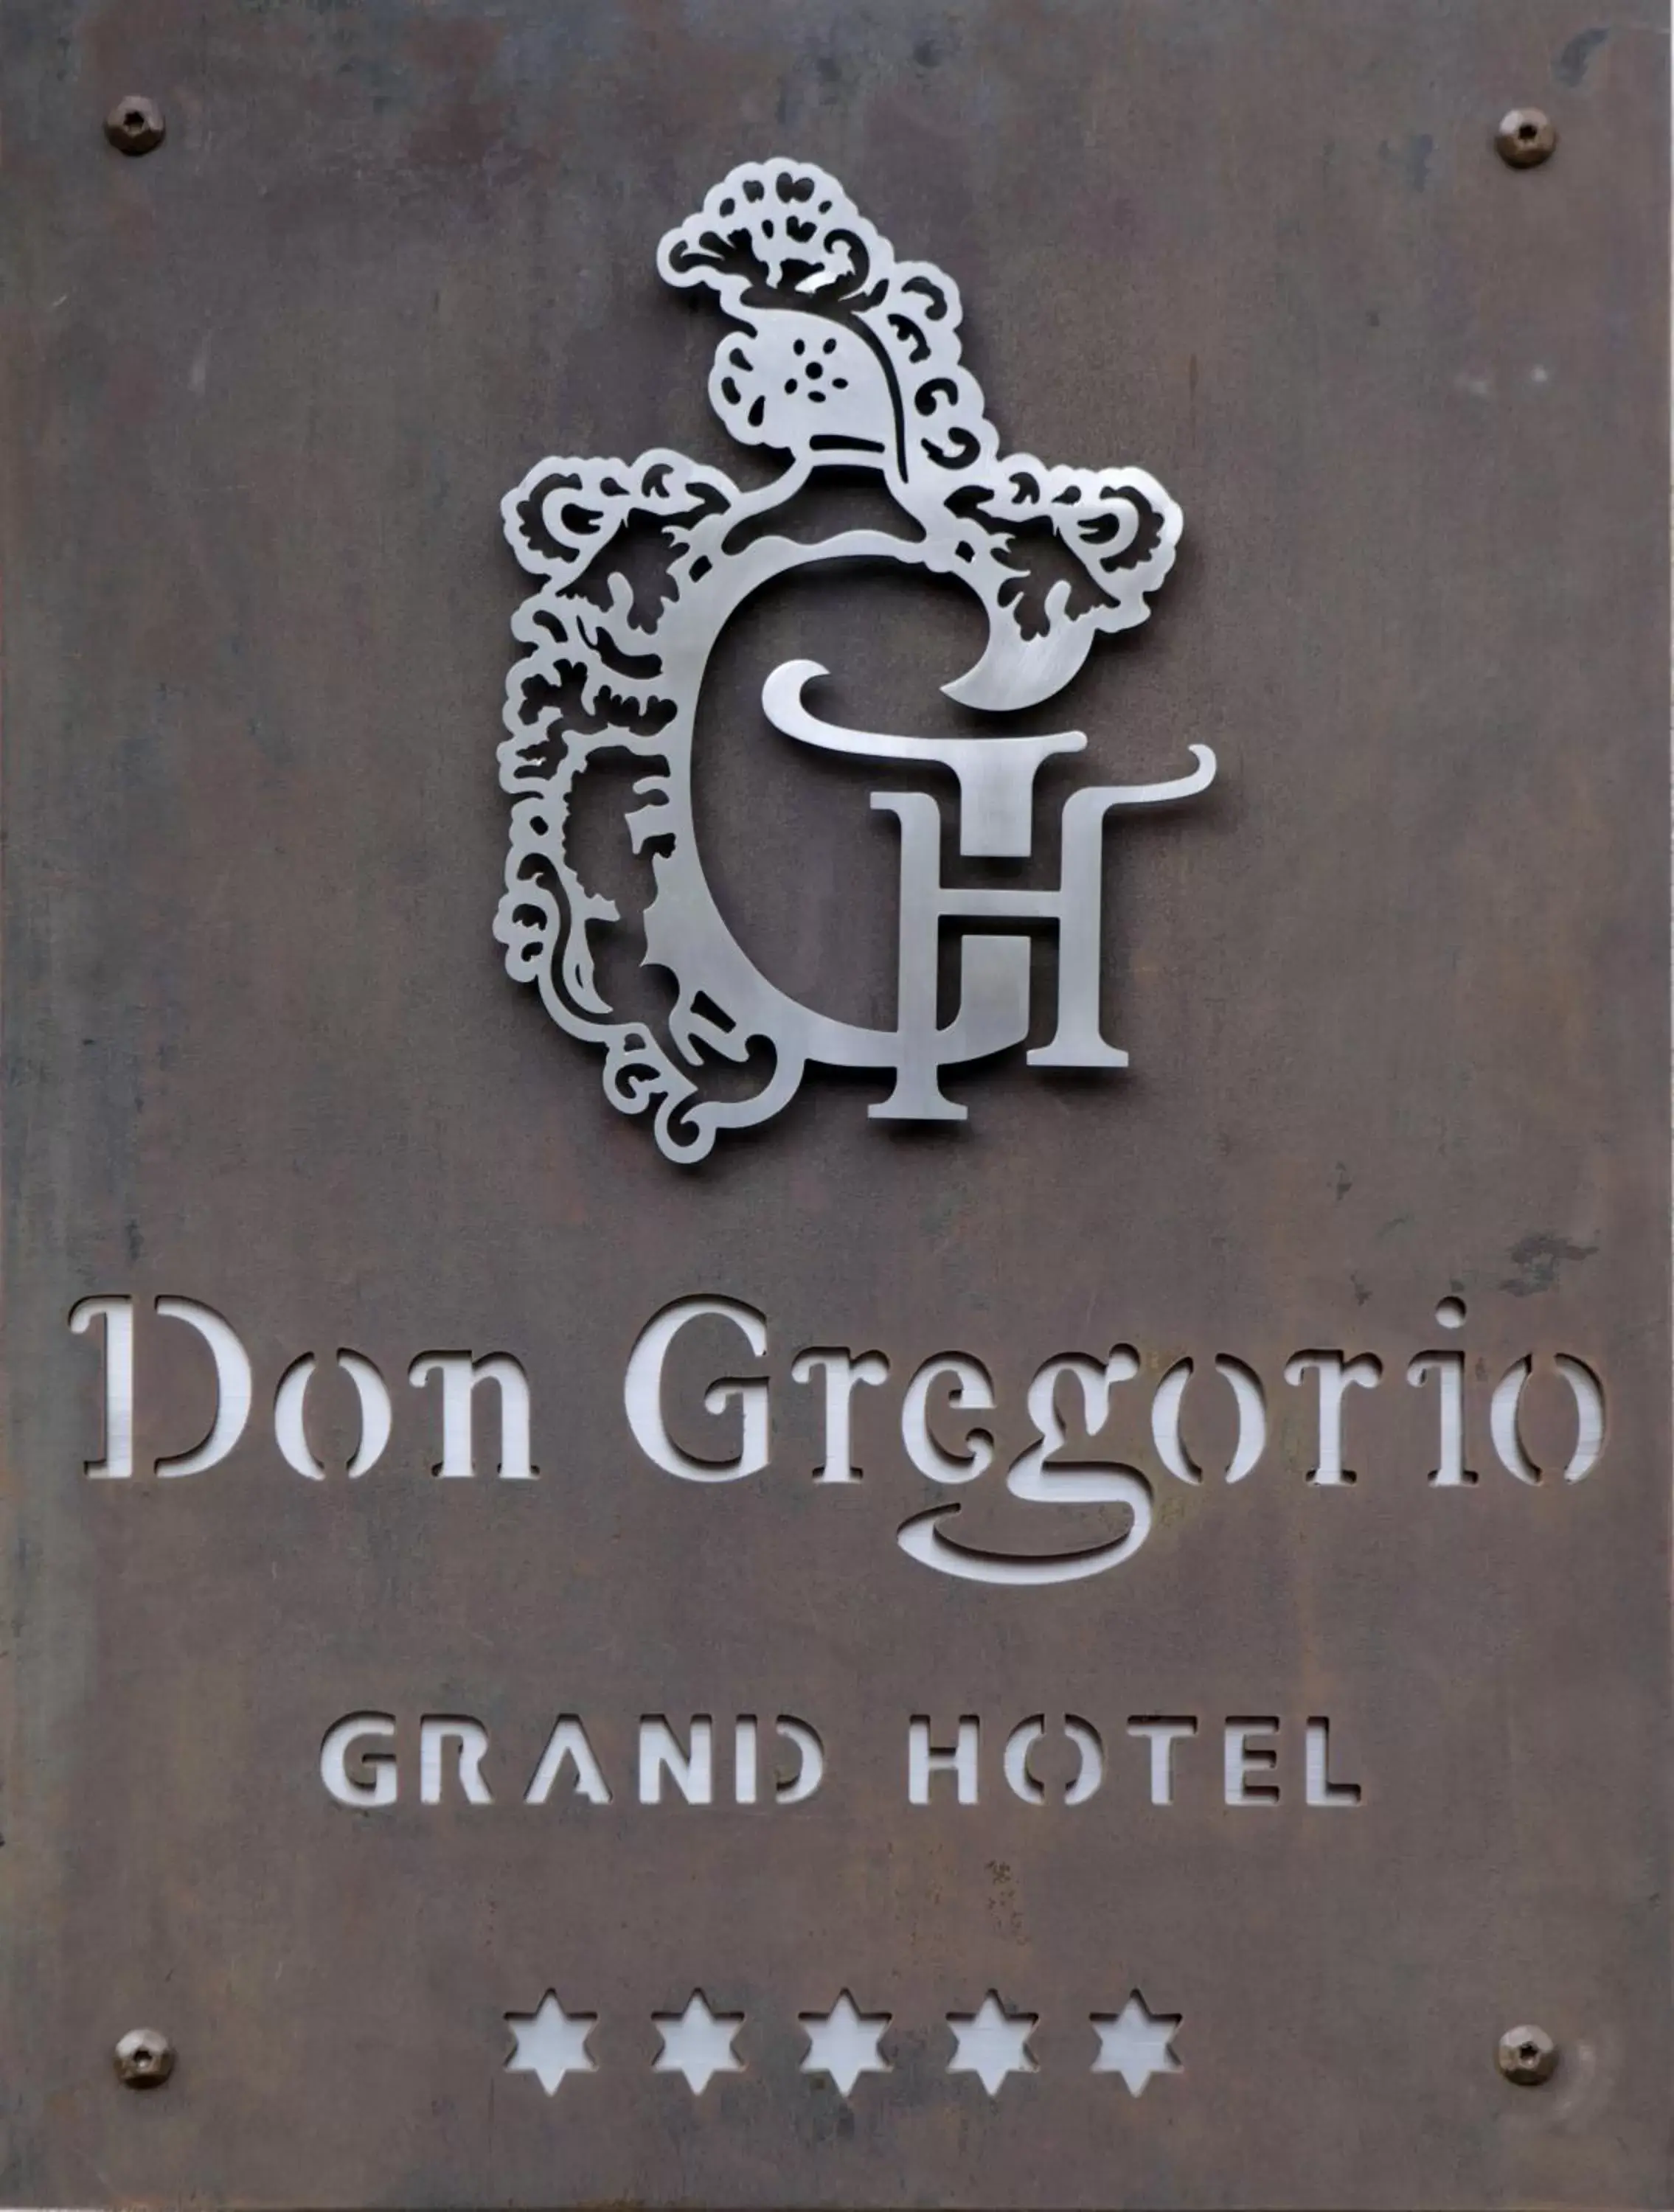 Decorative detail in Grand Hotel Don Gregorio